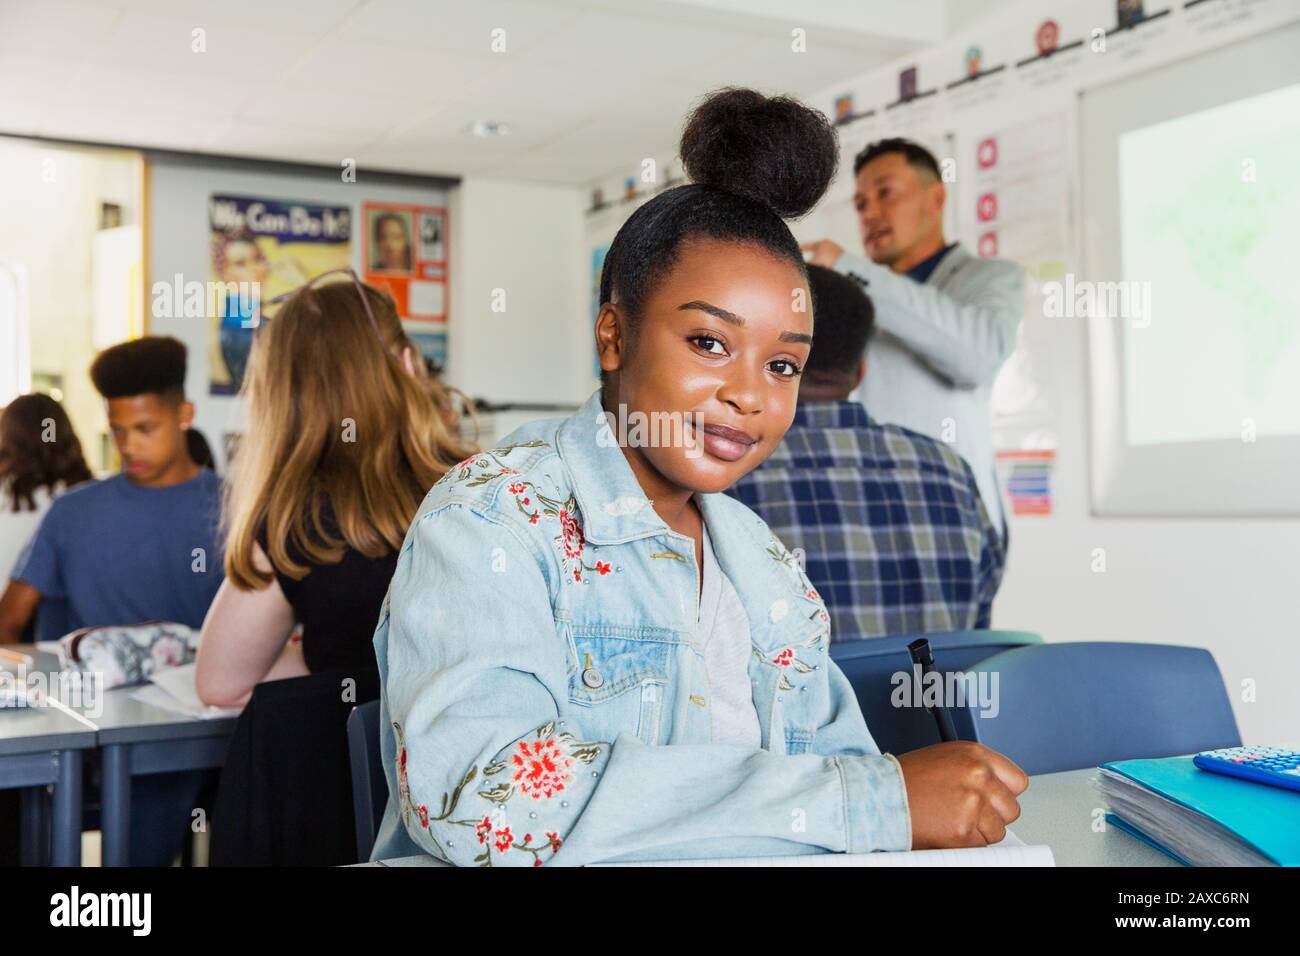 Portrait confidant high school girl student studying in classroom Stock Photo